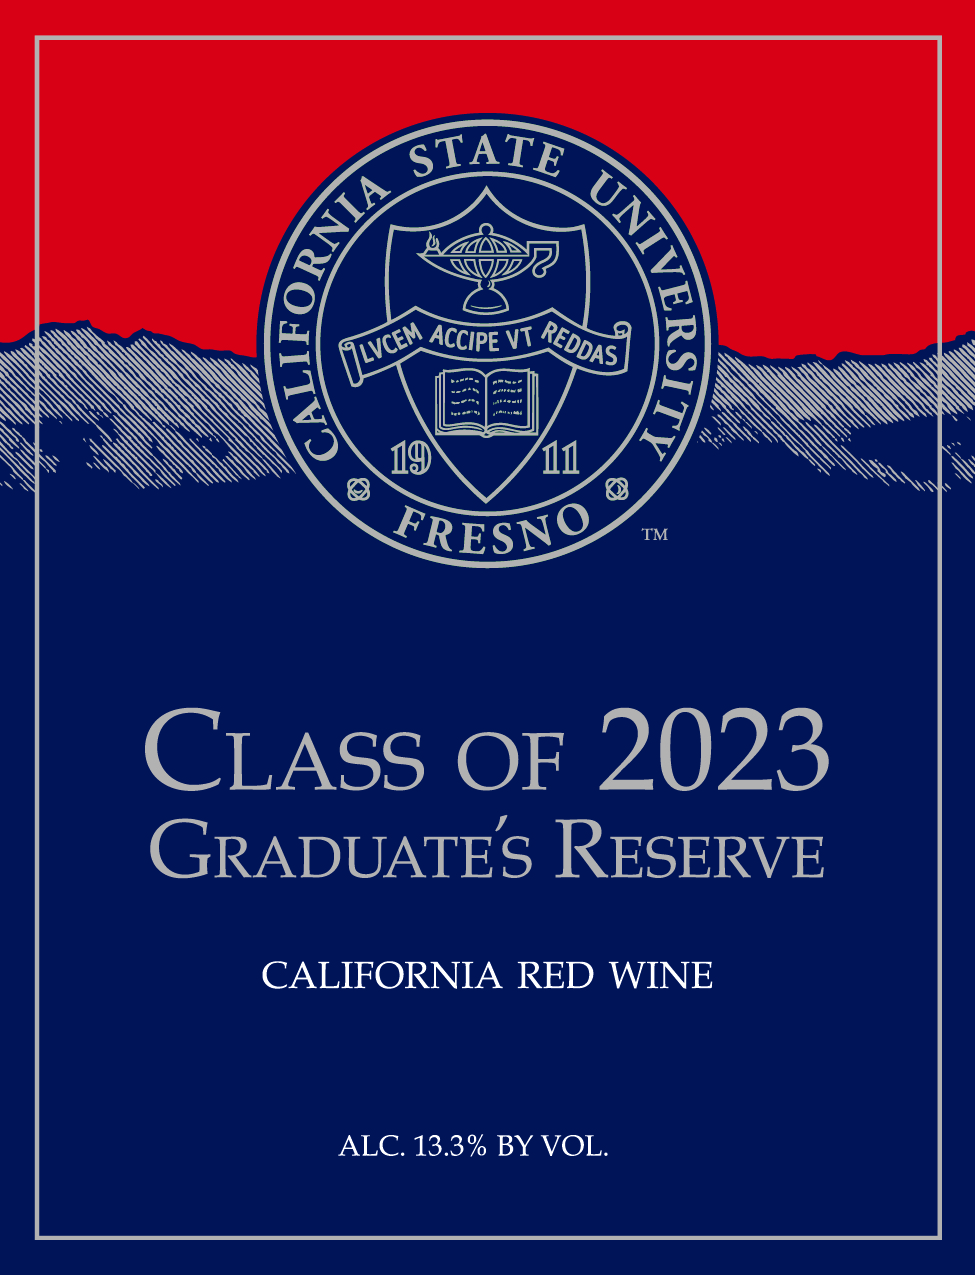 Fresno State Winery Graduate Reserve 2022 label